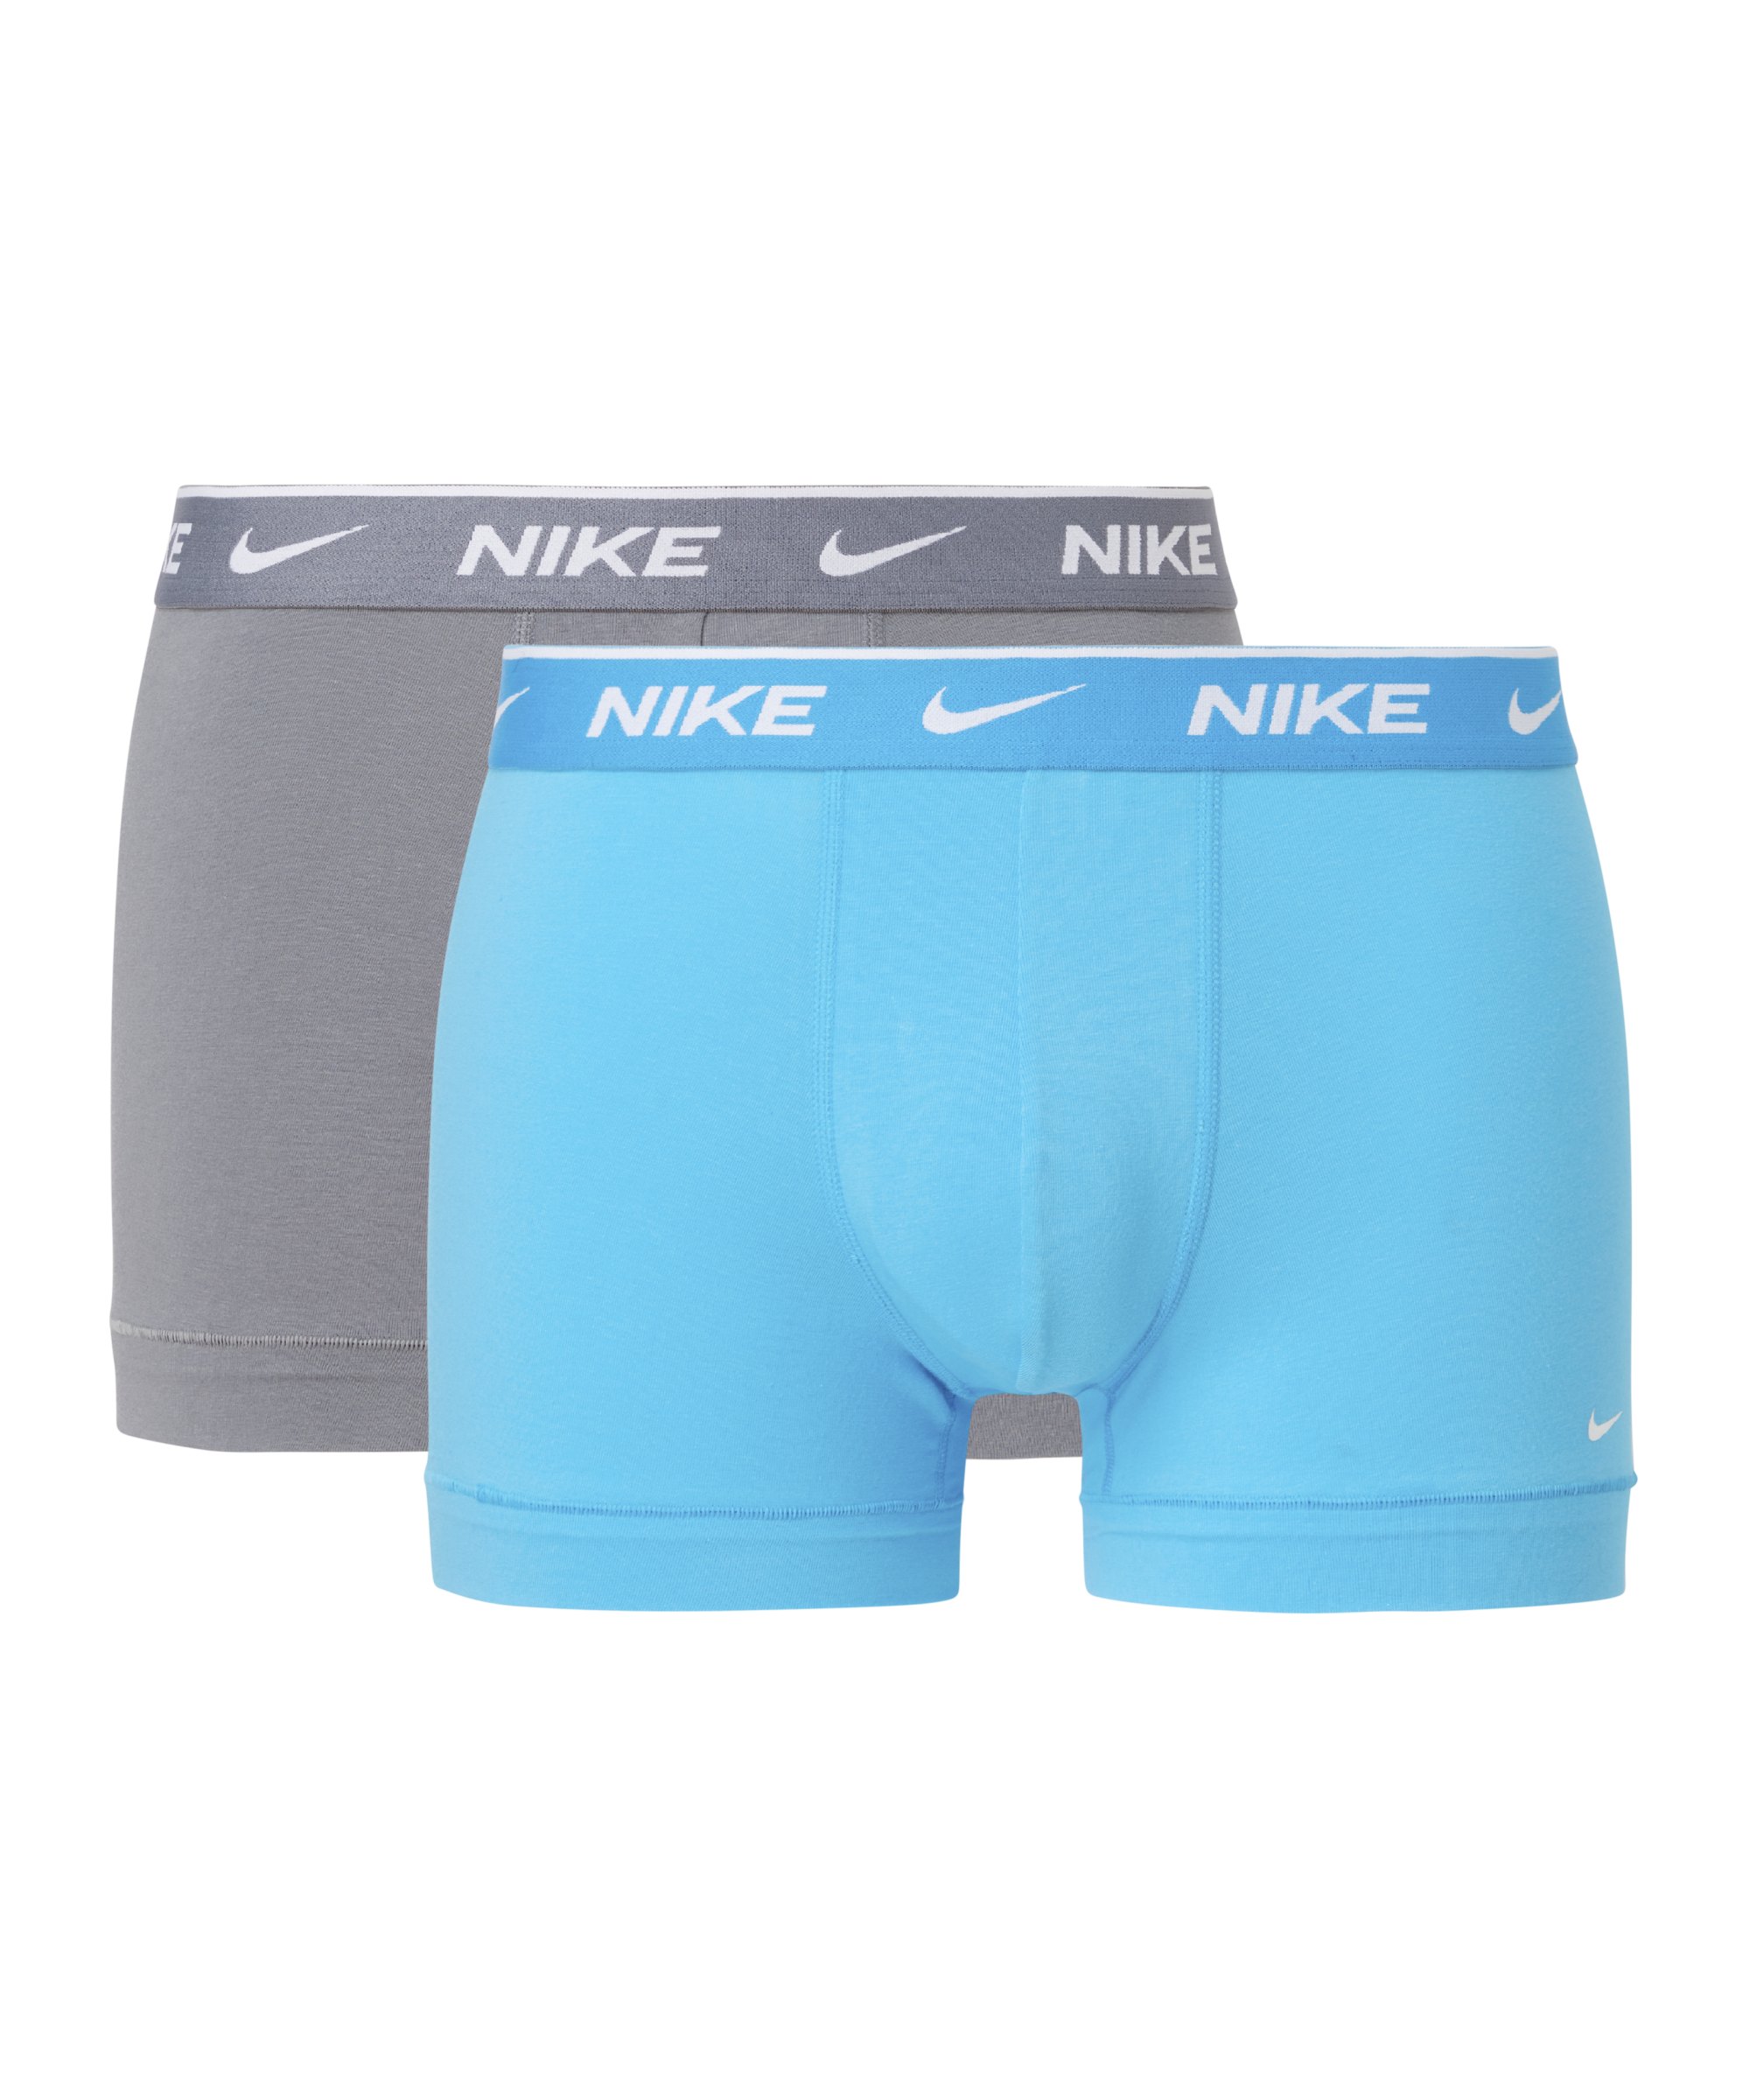 Nike Cotton Trunk Boxershort 2er Pack blau FAMJ - blau